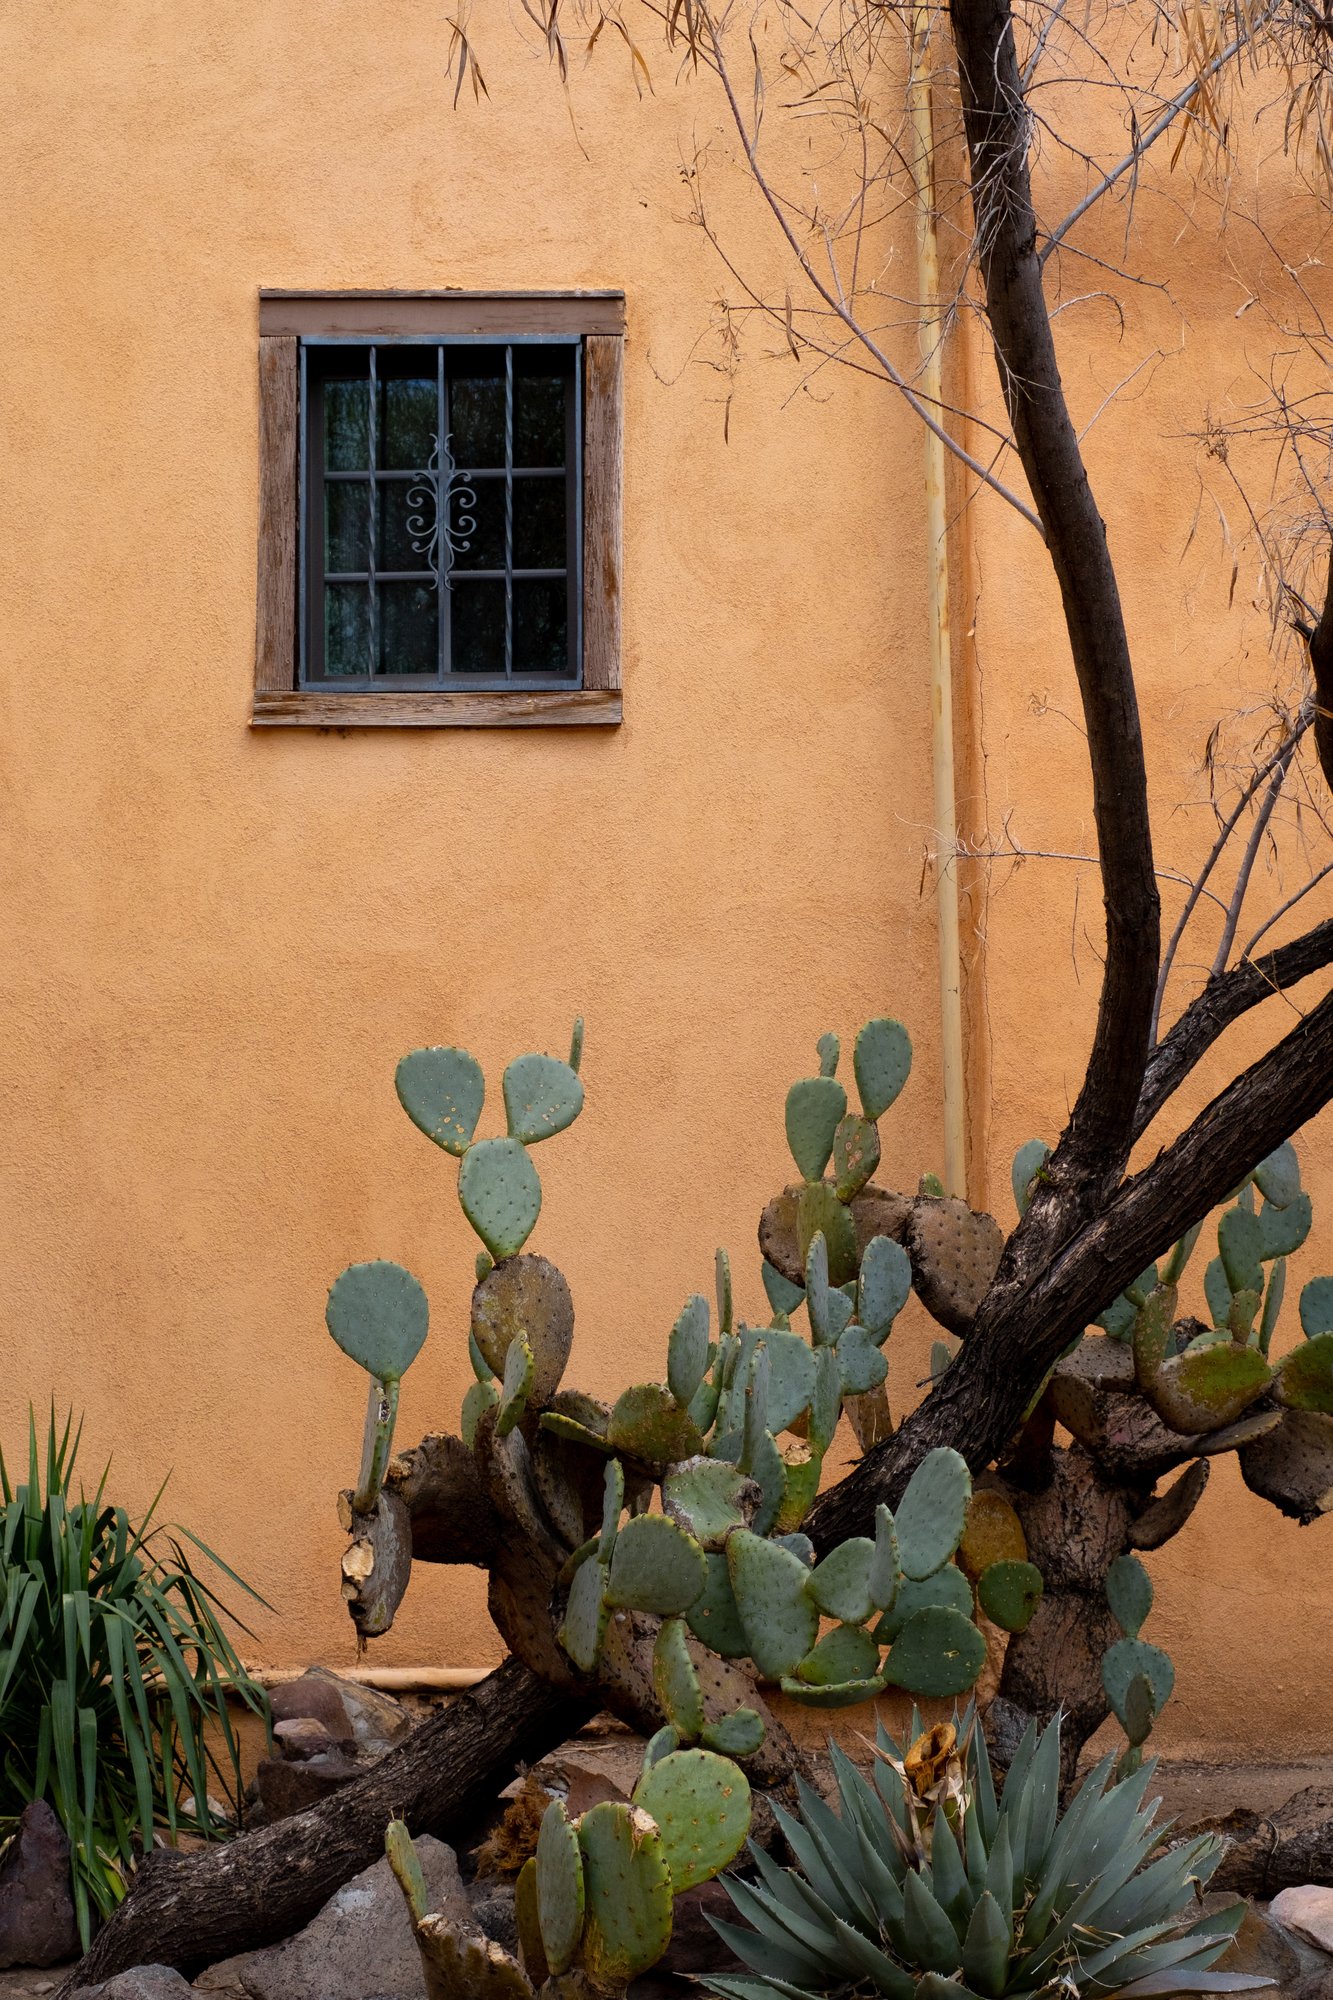 Cactus in Santa Fe, New Mexico.